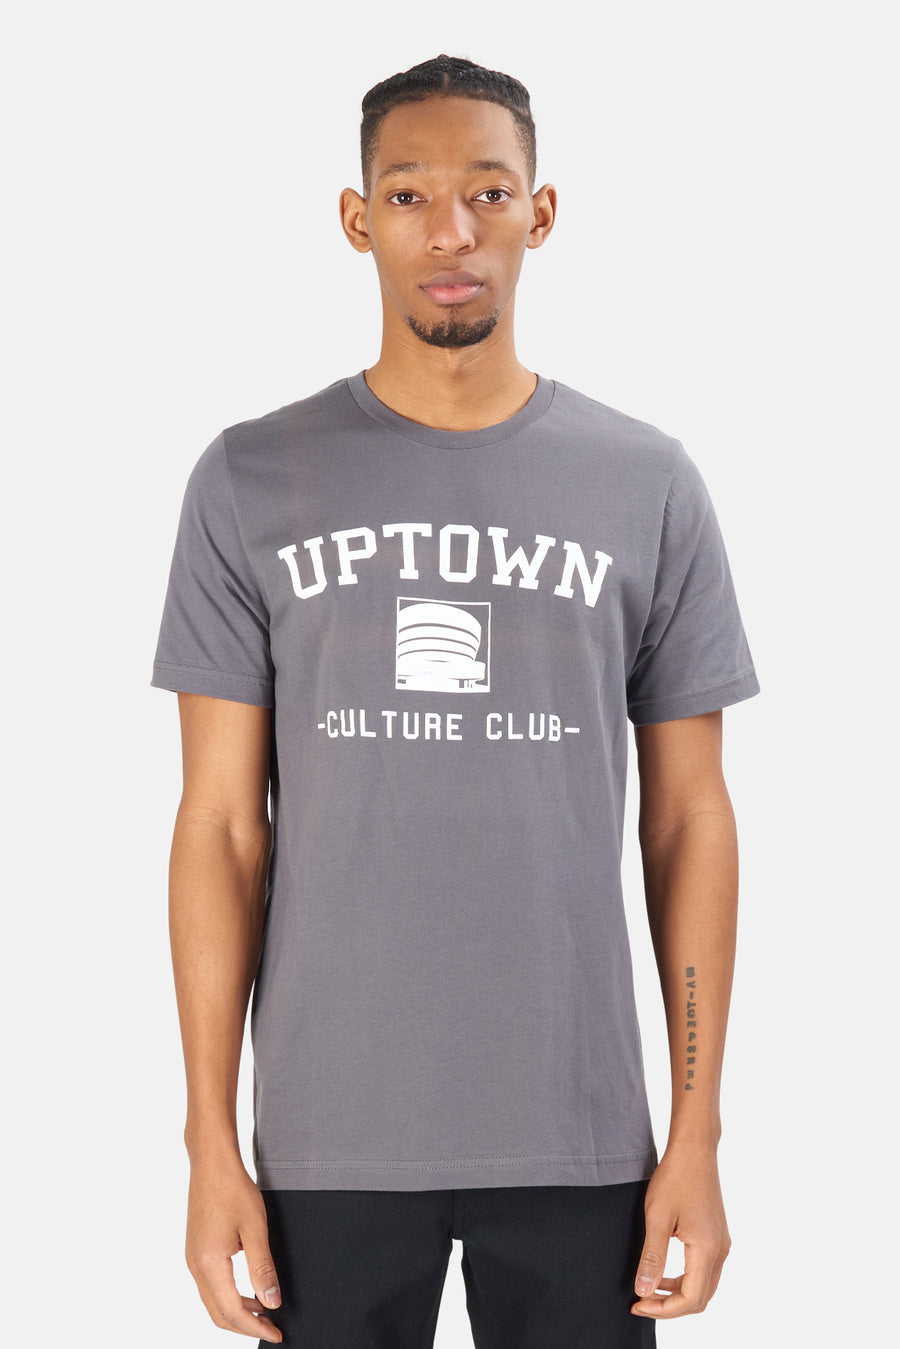 Uptown Culture Club Tee Grey - blueandcream